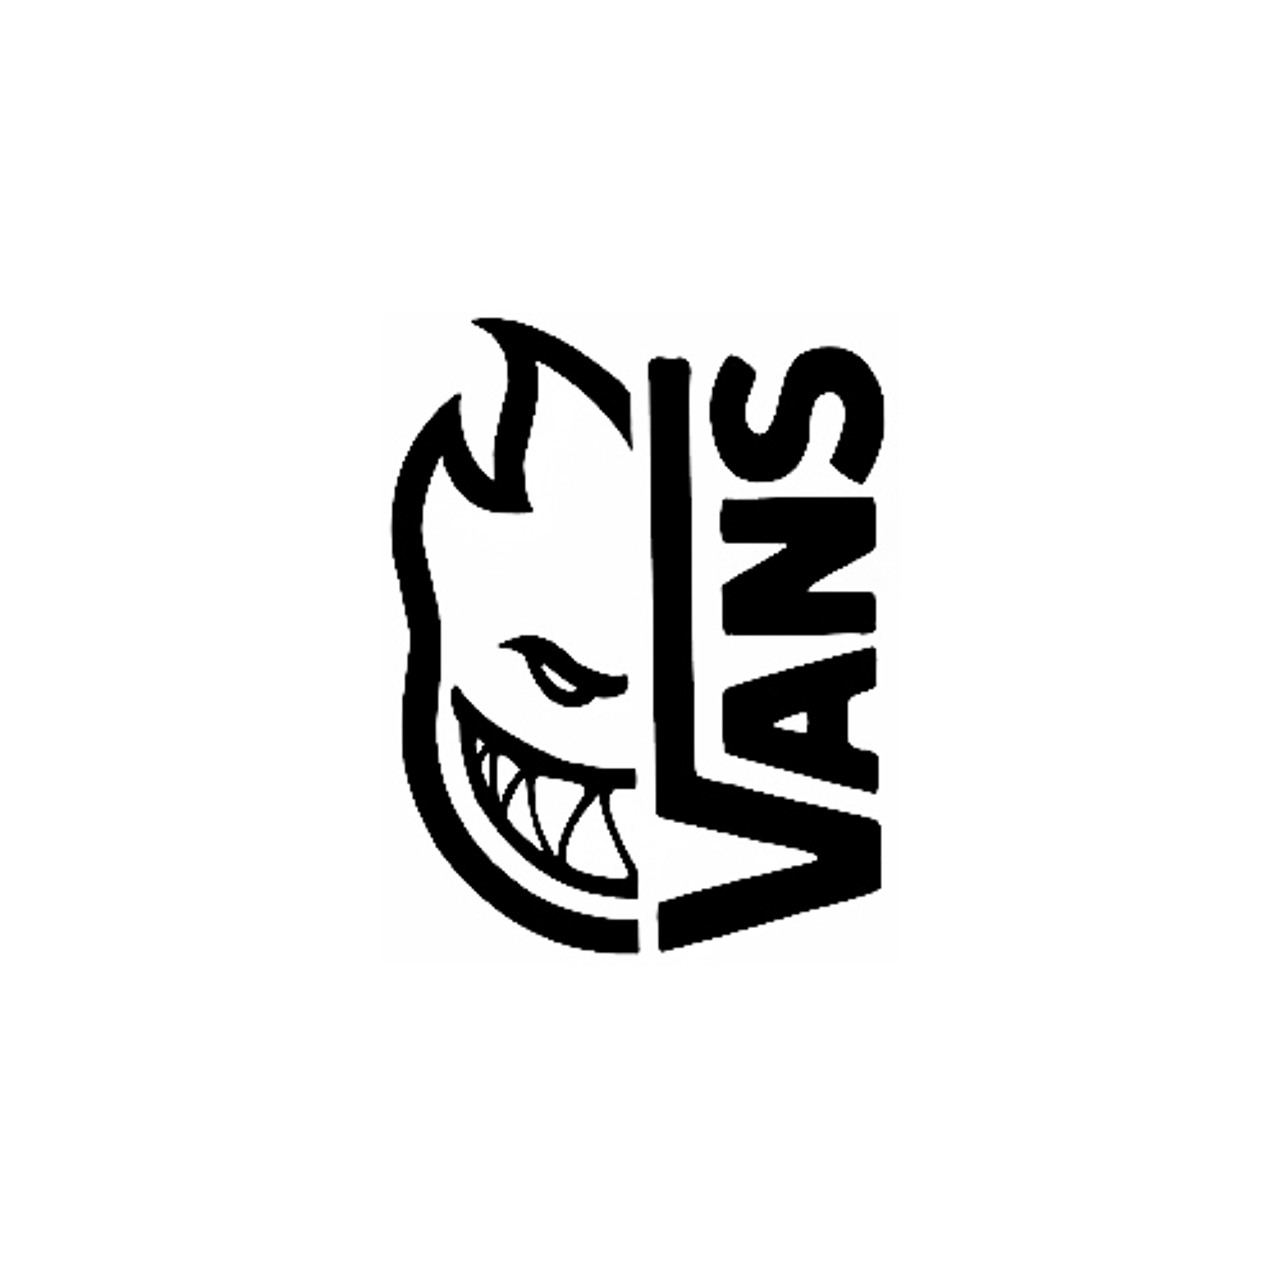 Vans X Spitfire Logo Vinyl Decal